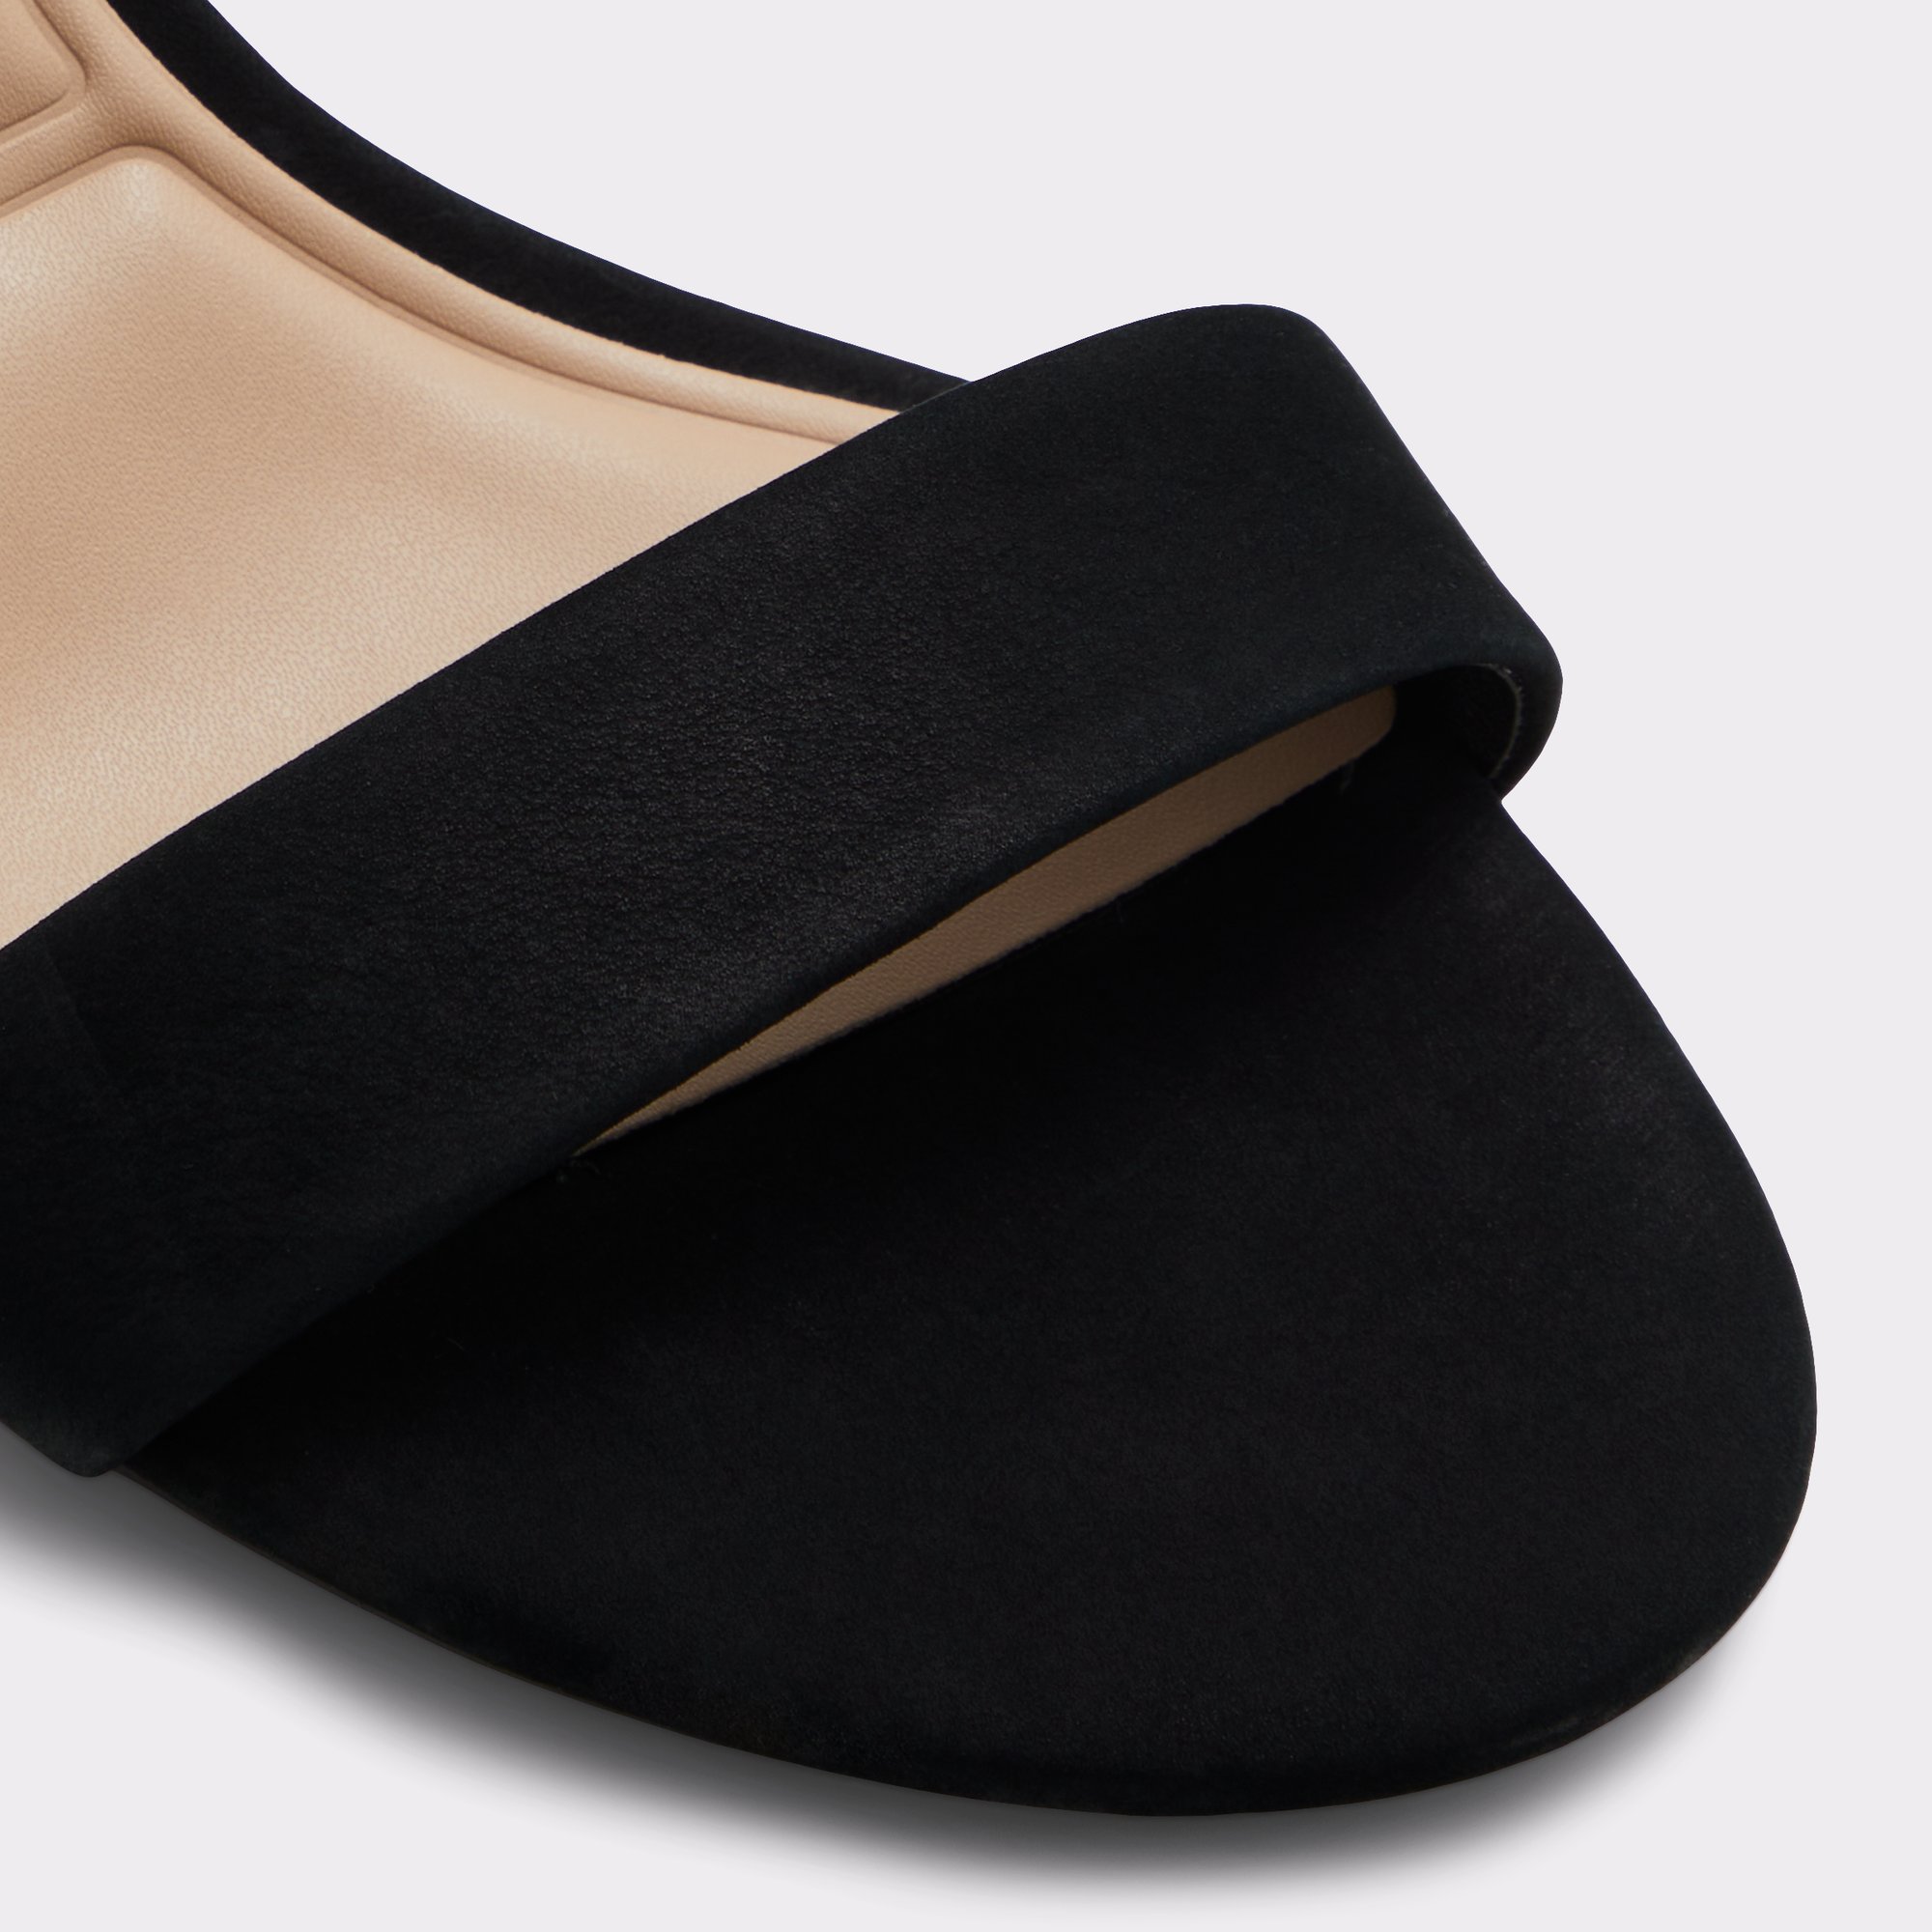 Pristine Black Leather Nubuck Women's Strappy sandals | ALDO US